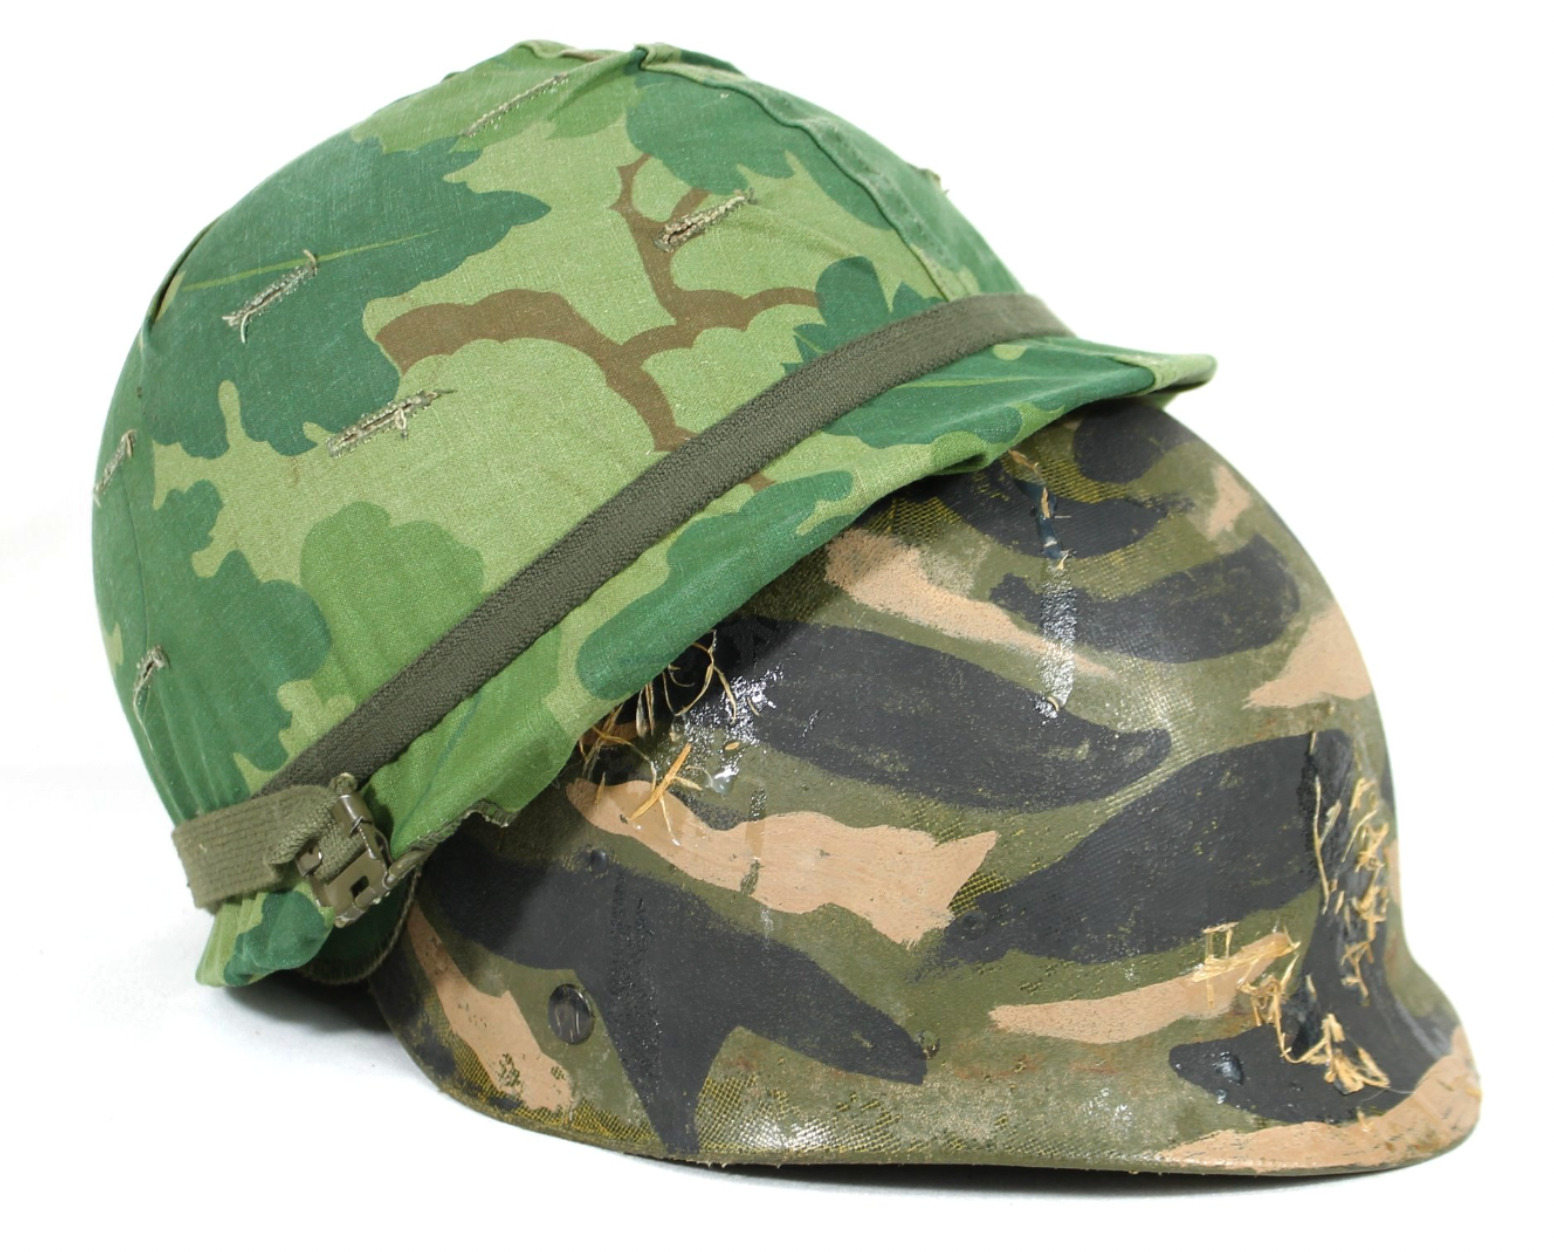 Vietnam War Airborne Complete Helmet set With Camouflage Liner